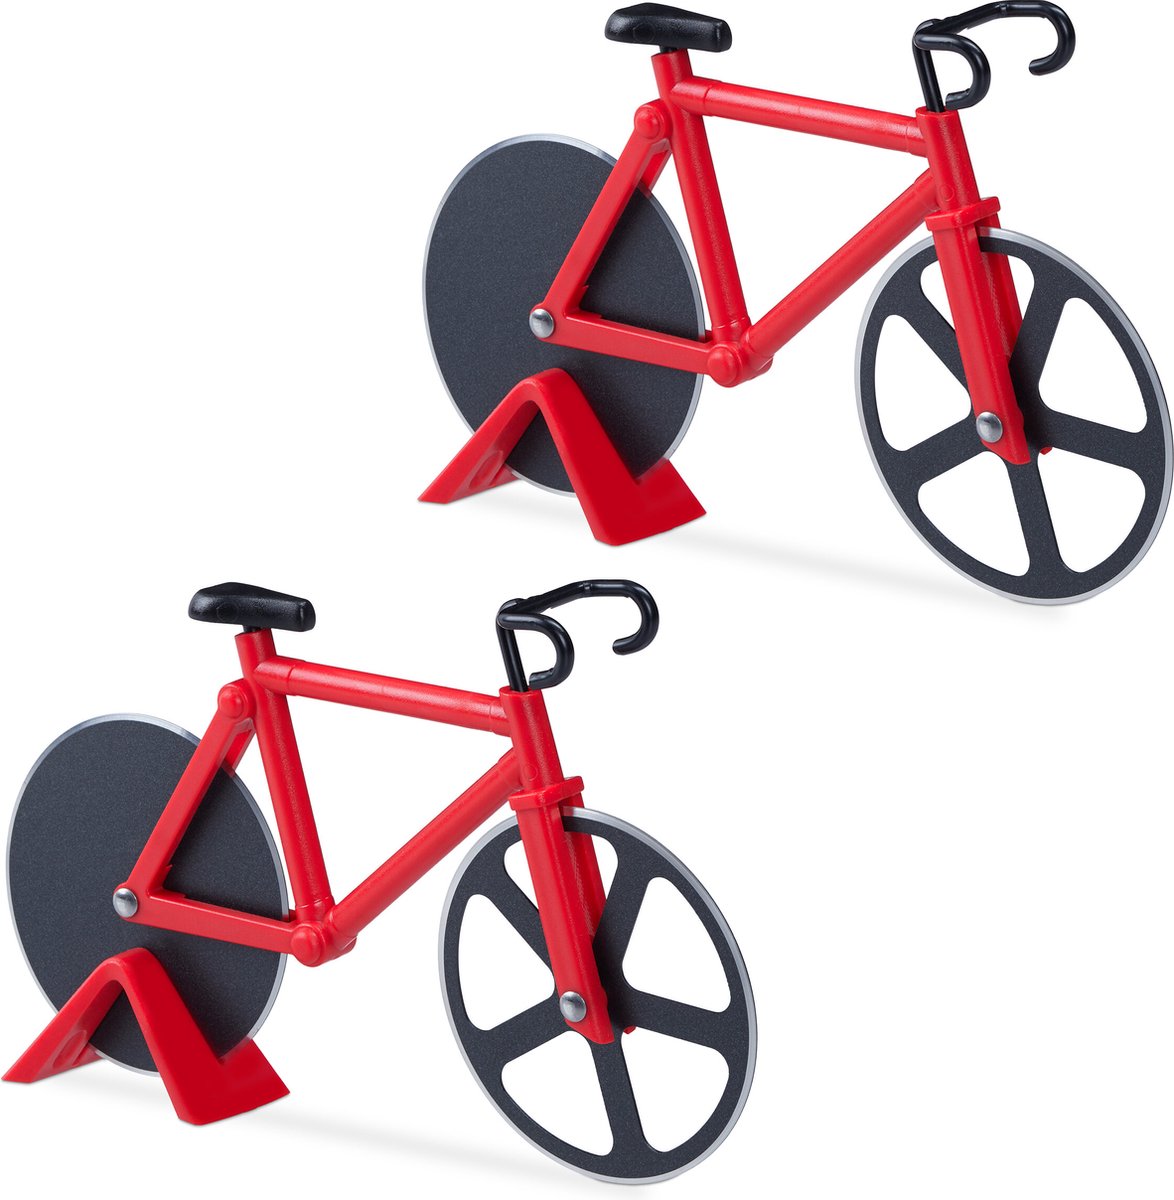 Relaxdays 2x pizzasnijder fiets - pizzames racefiets - pizzaroller - rood - deegroller